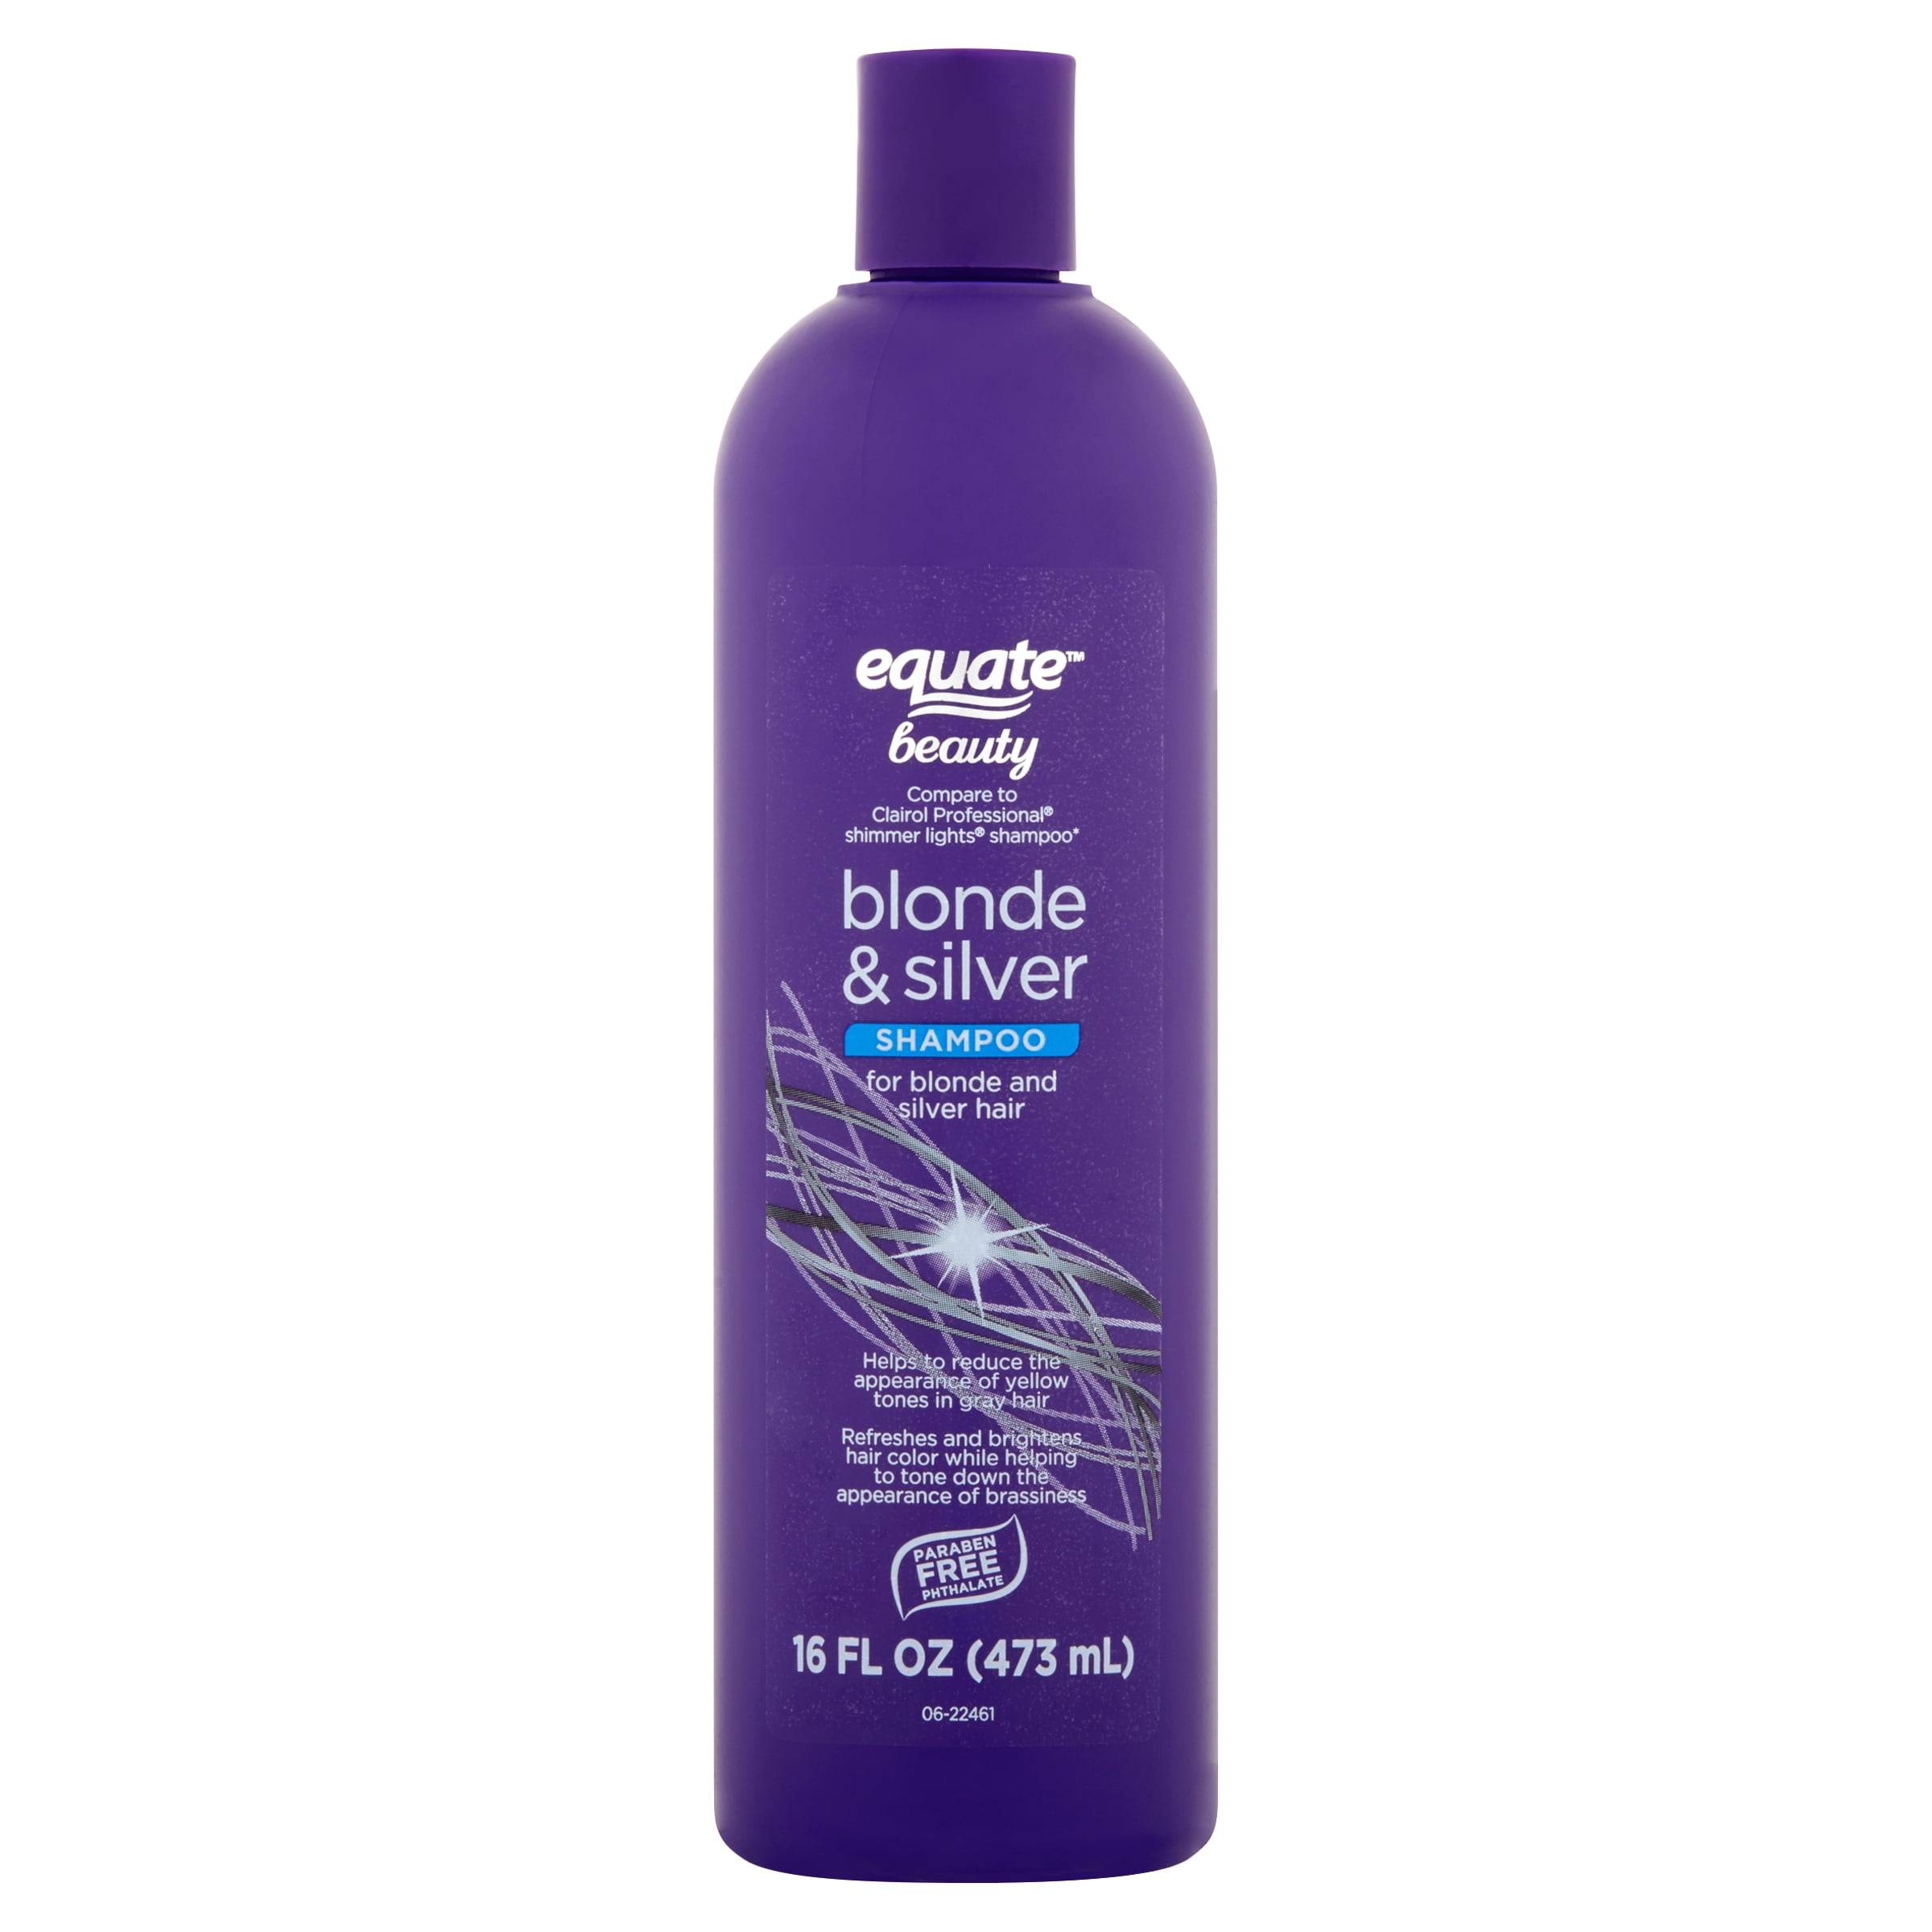 Beauty & Silver Color Protection Shampoo, 16 fl oz - Walmart.com